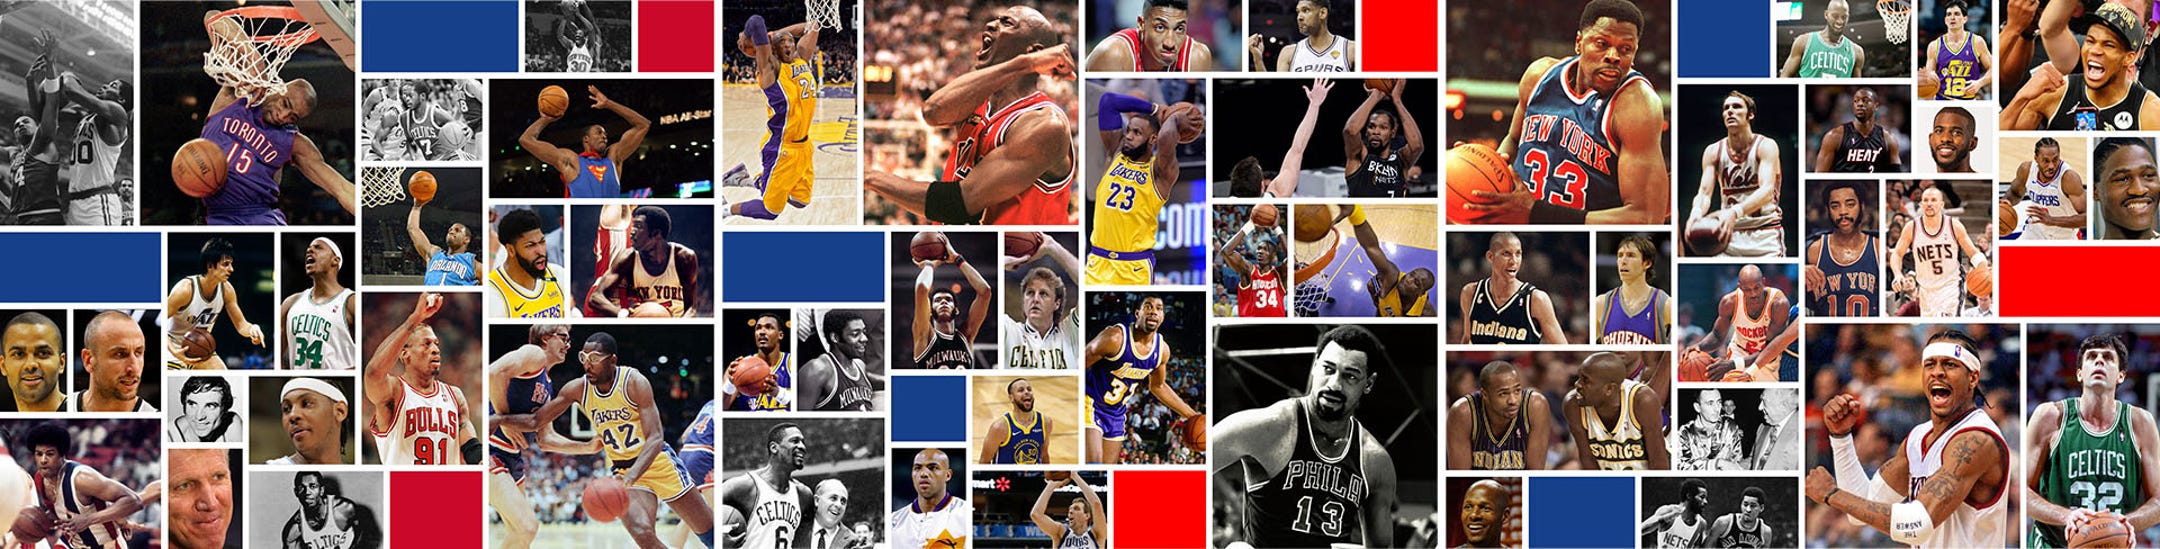 Michael Jordan, LeBron James 1-2 on USA TODAY's 75 NBA greatest ever